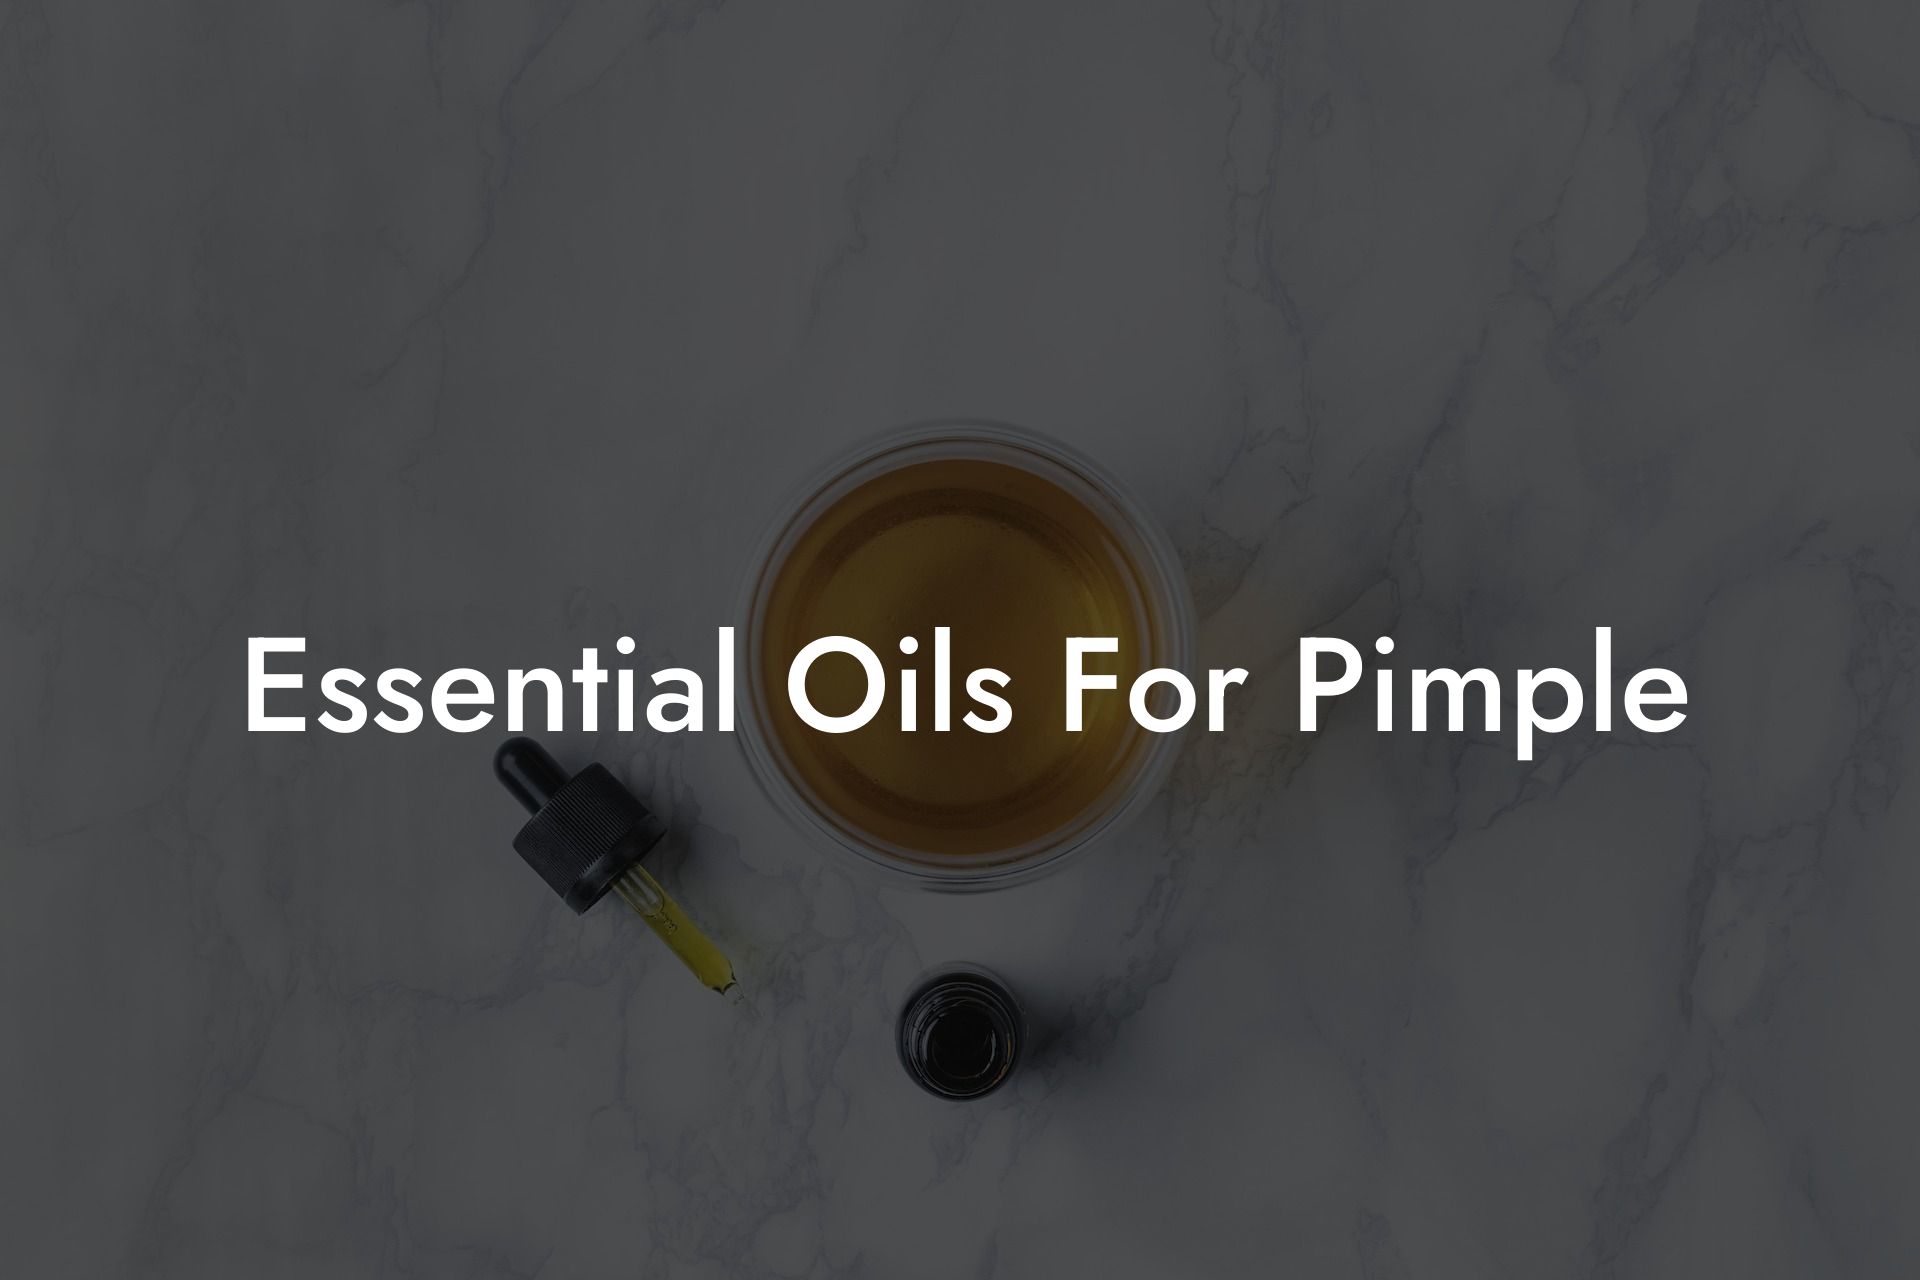 Essential Oils For Pimple